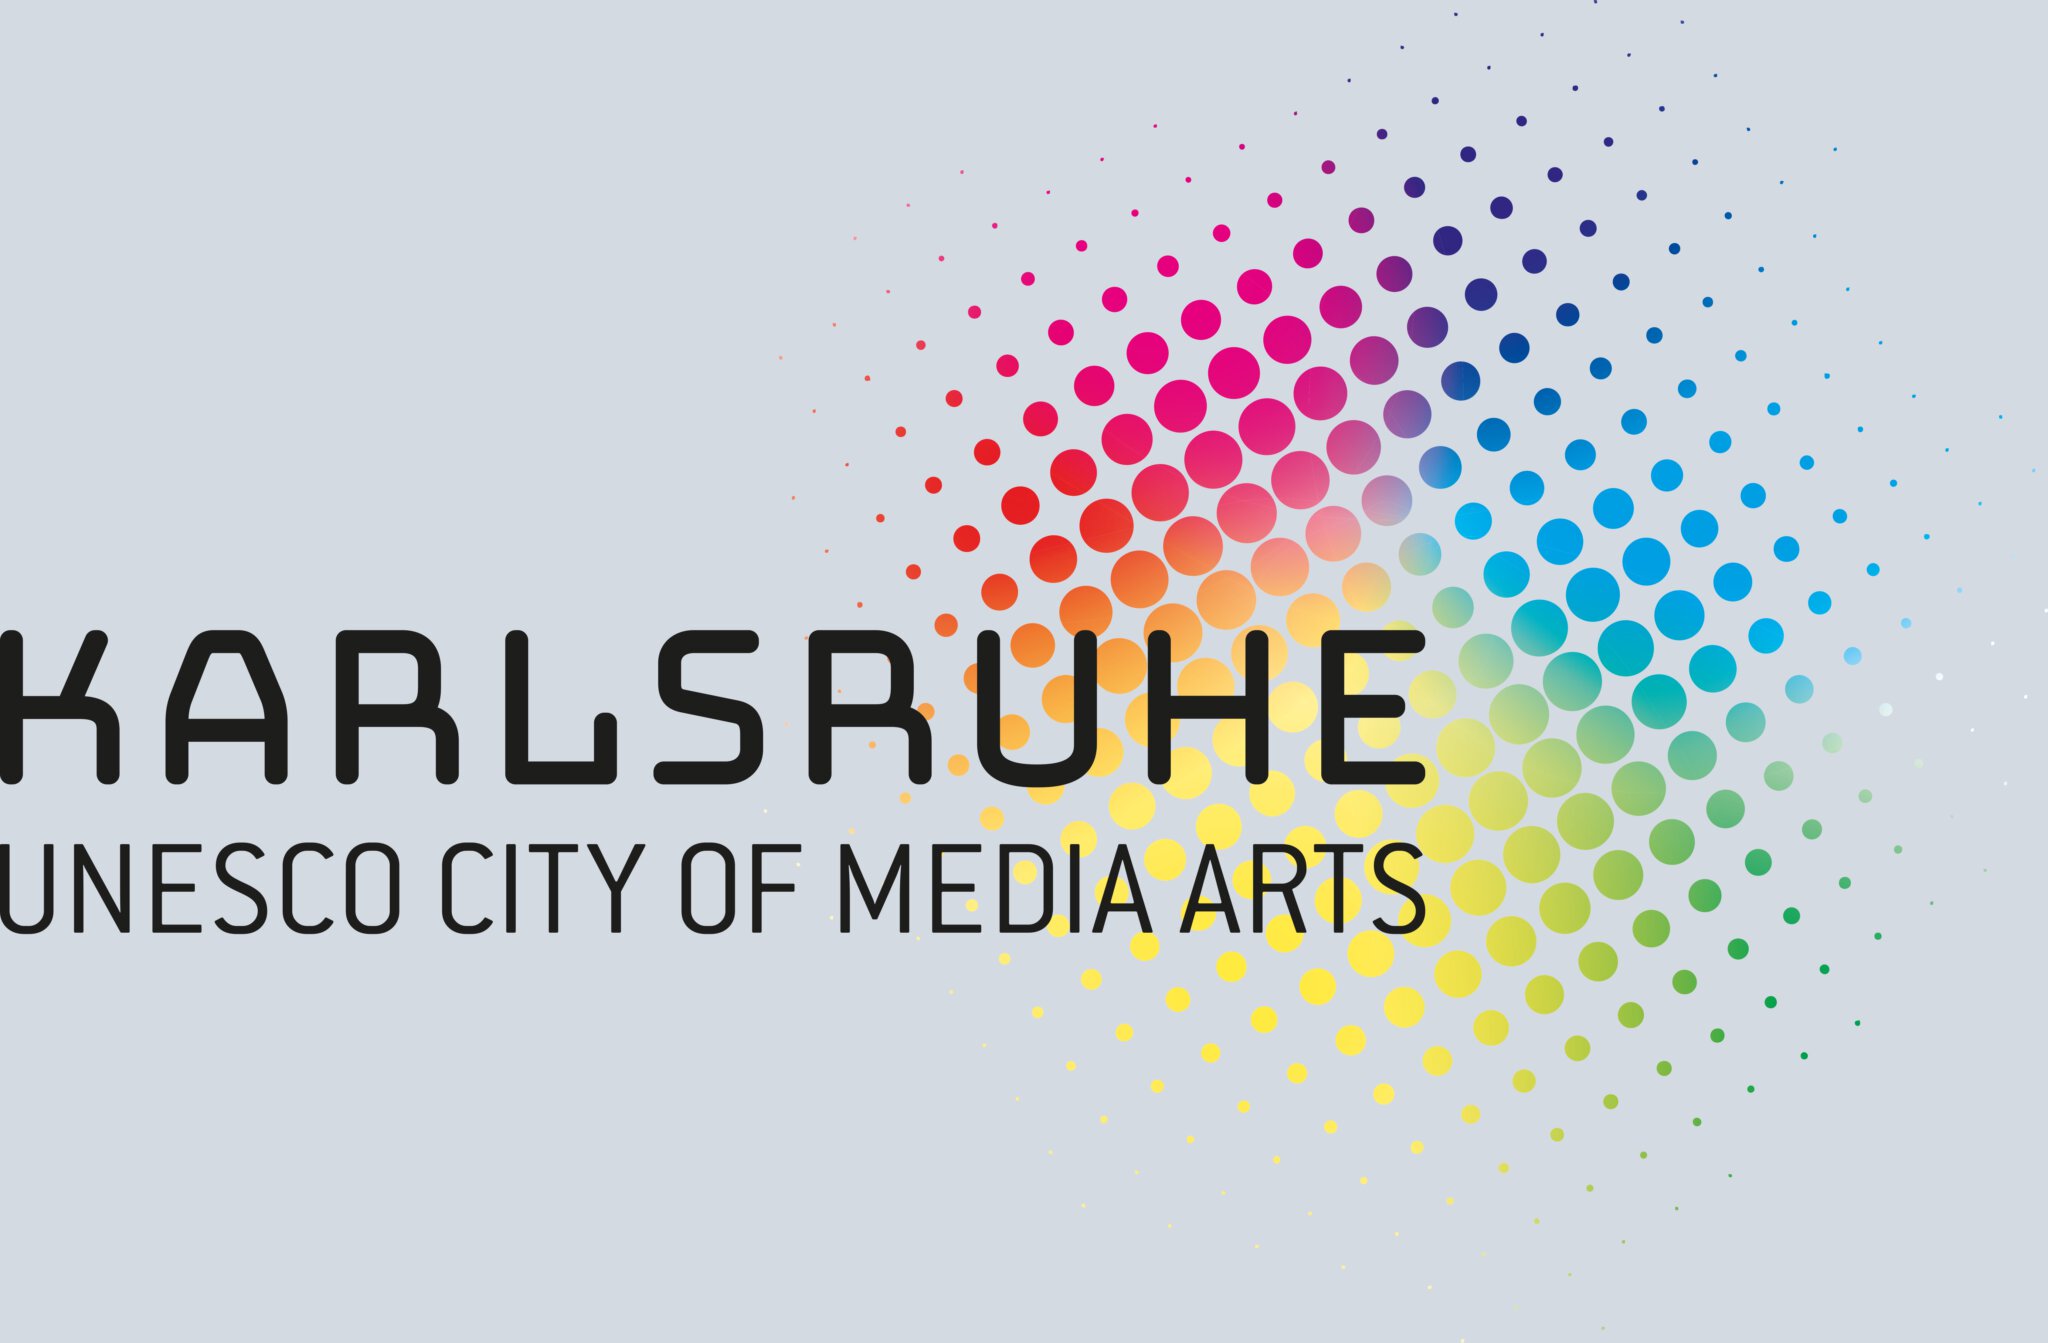 Das Logo der UNESCO City of Media Arts